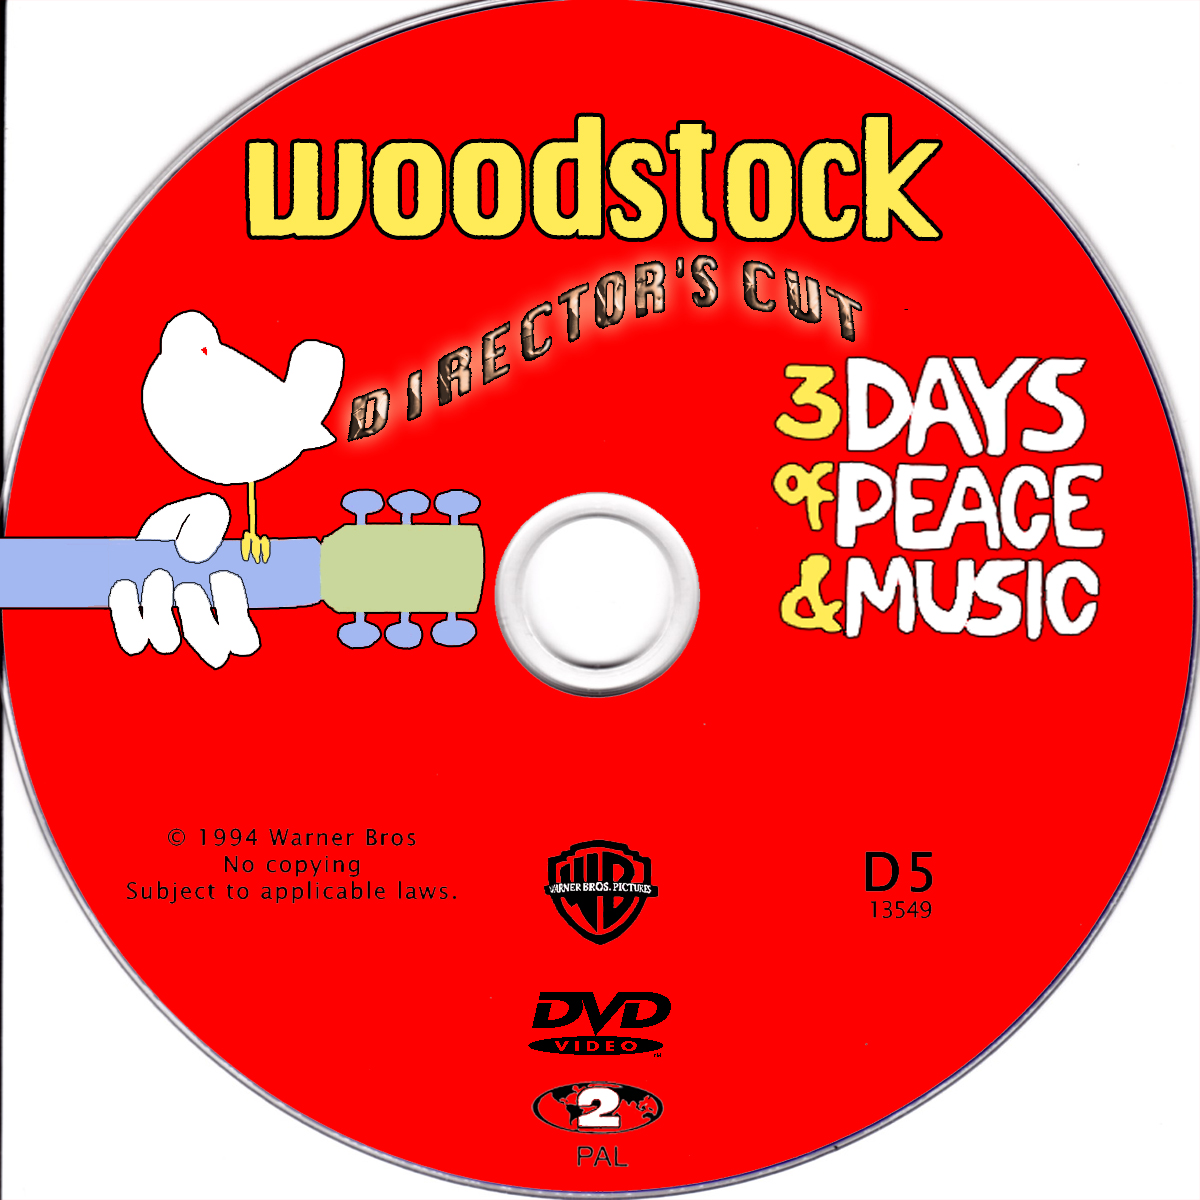 Woodstock custom